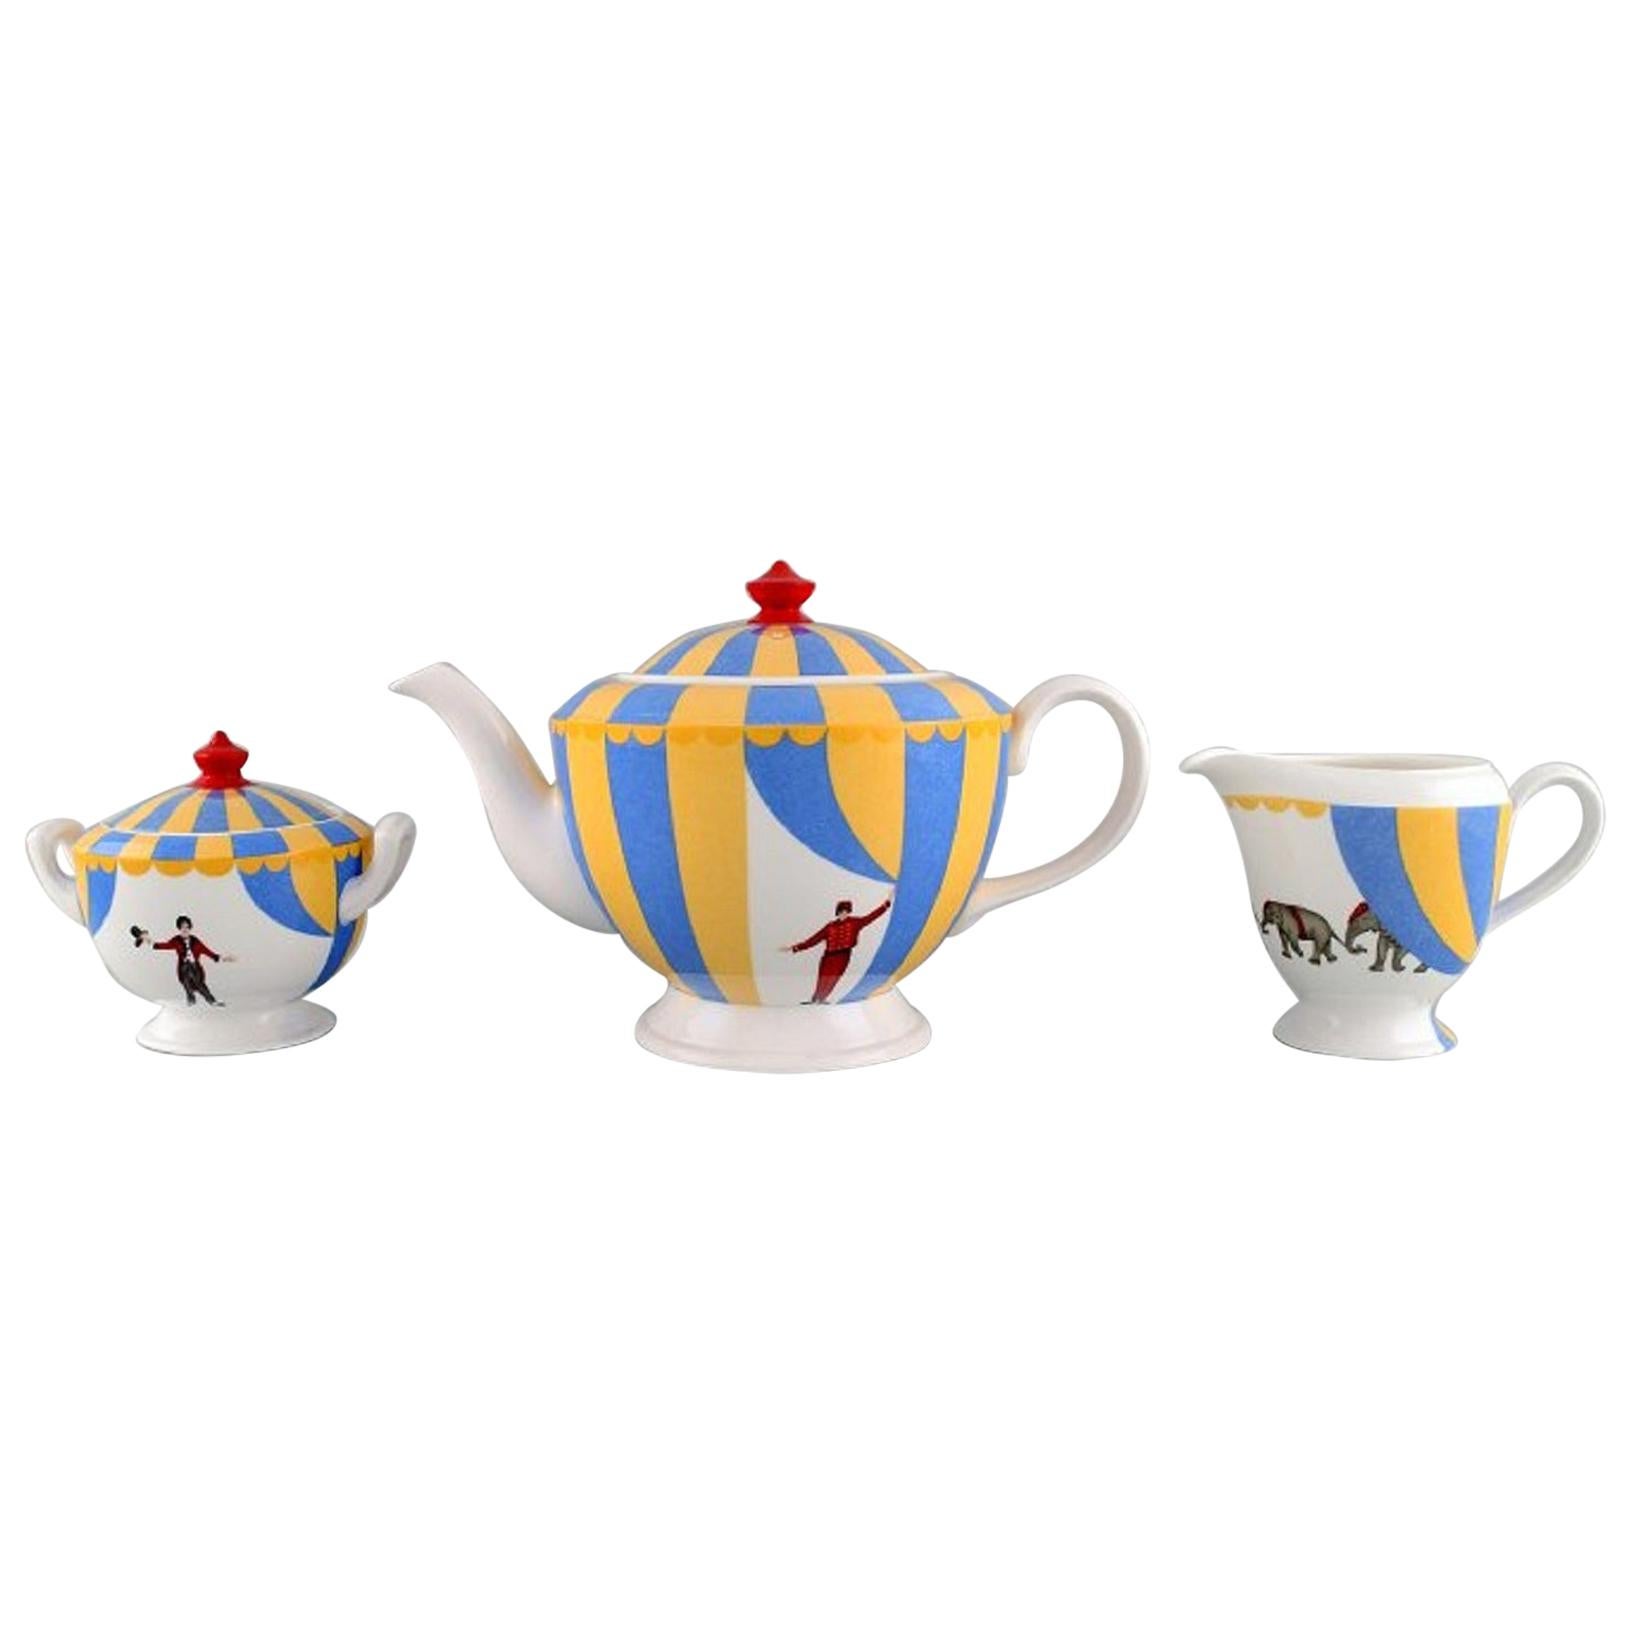 Hermès Circus Tea Service, Porcelain Teapot, Cream Jug and Sugar Bowl